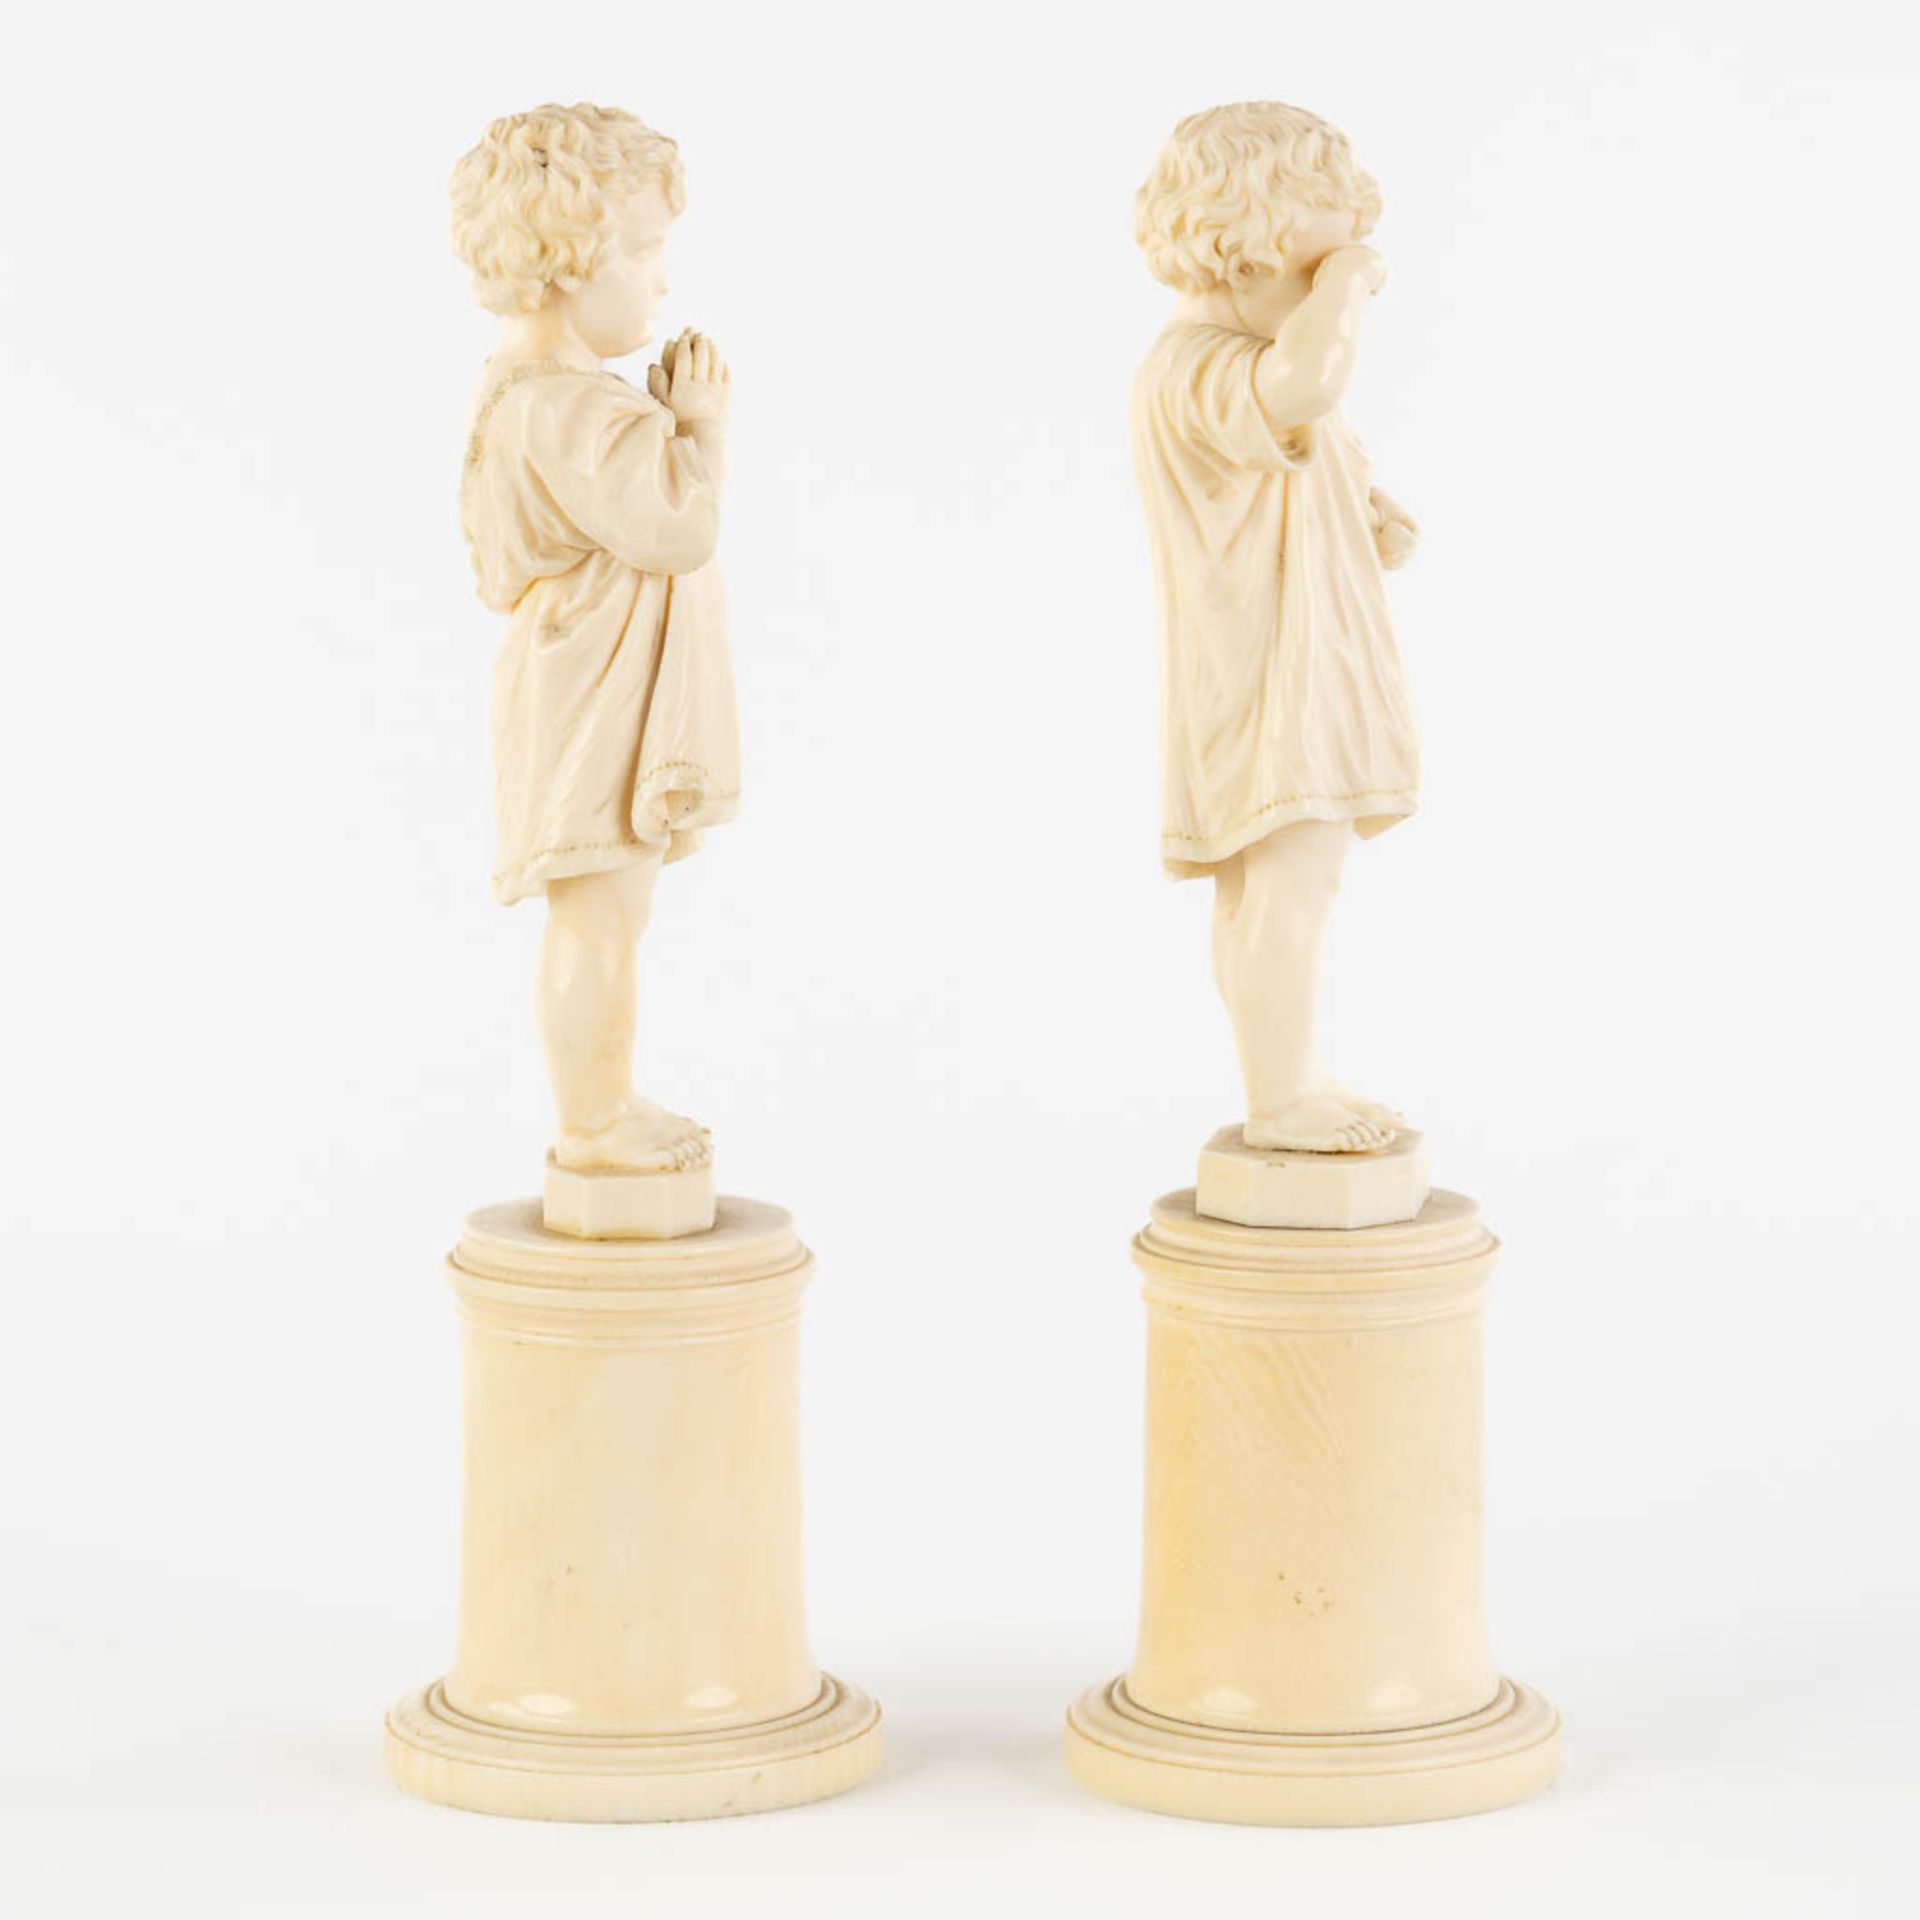 A pair of fine sculptures of Children, Ivory, Germany or Austria. 19th C. (H:19,5 x D:6 cm) - Bild 3 aus 10